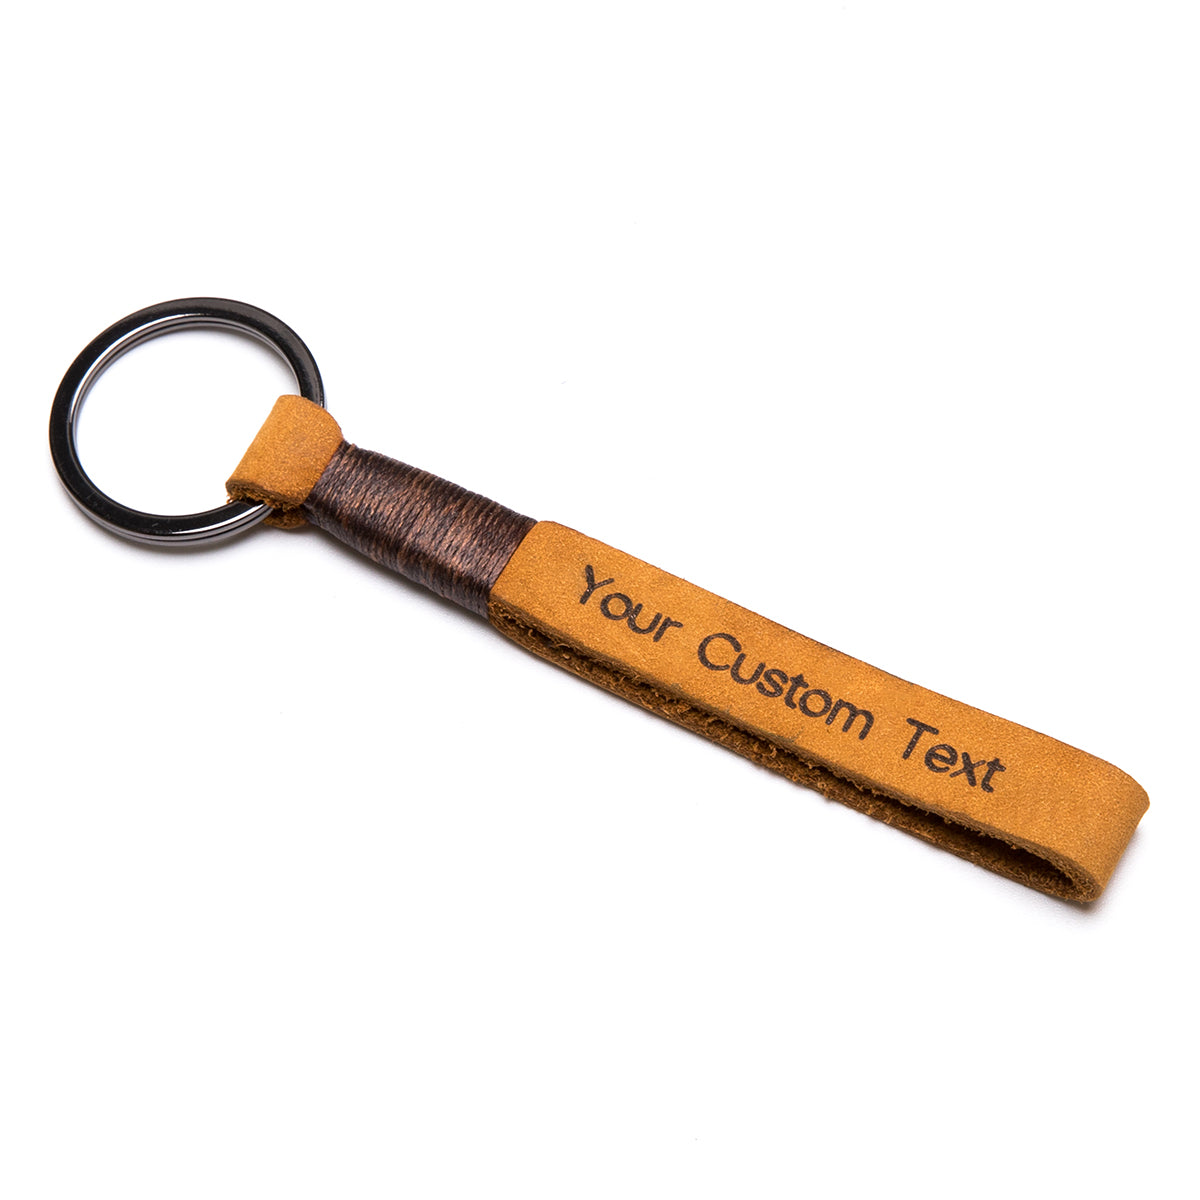 Fanery Sue Personalized Name Keychain Custom Genuine Leather Keychain Engraved Any Word Keyring ID Key Tag